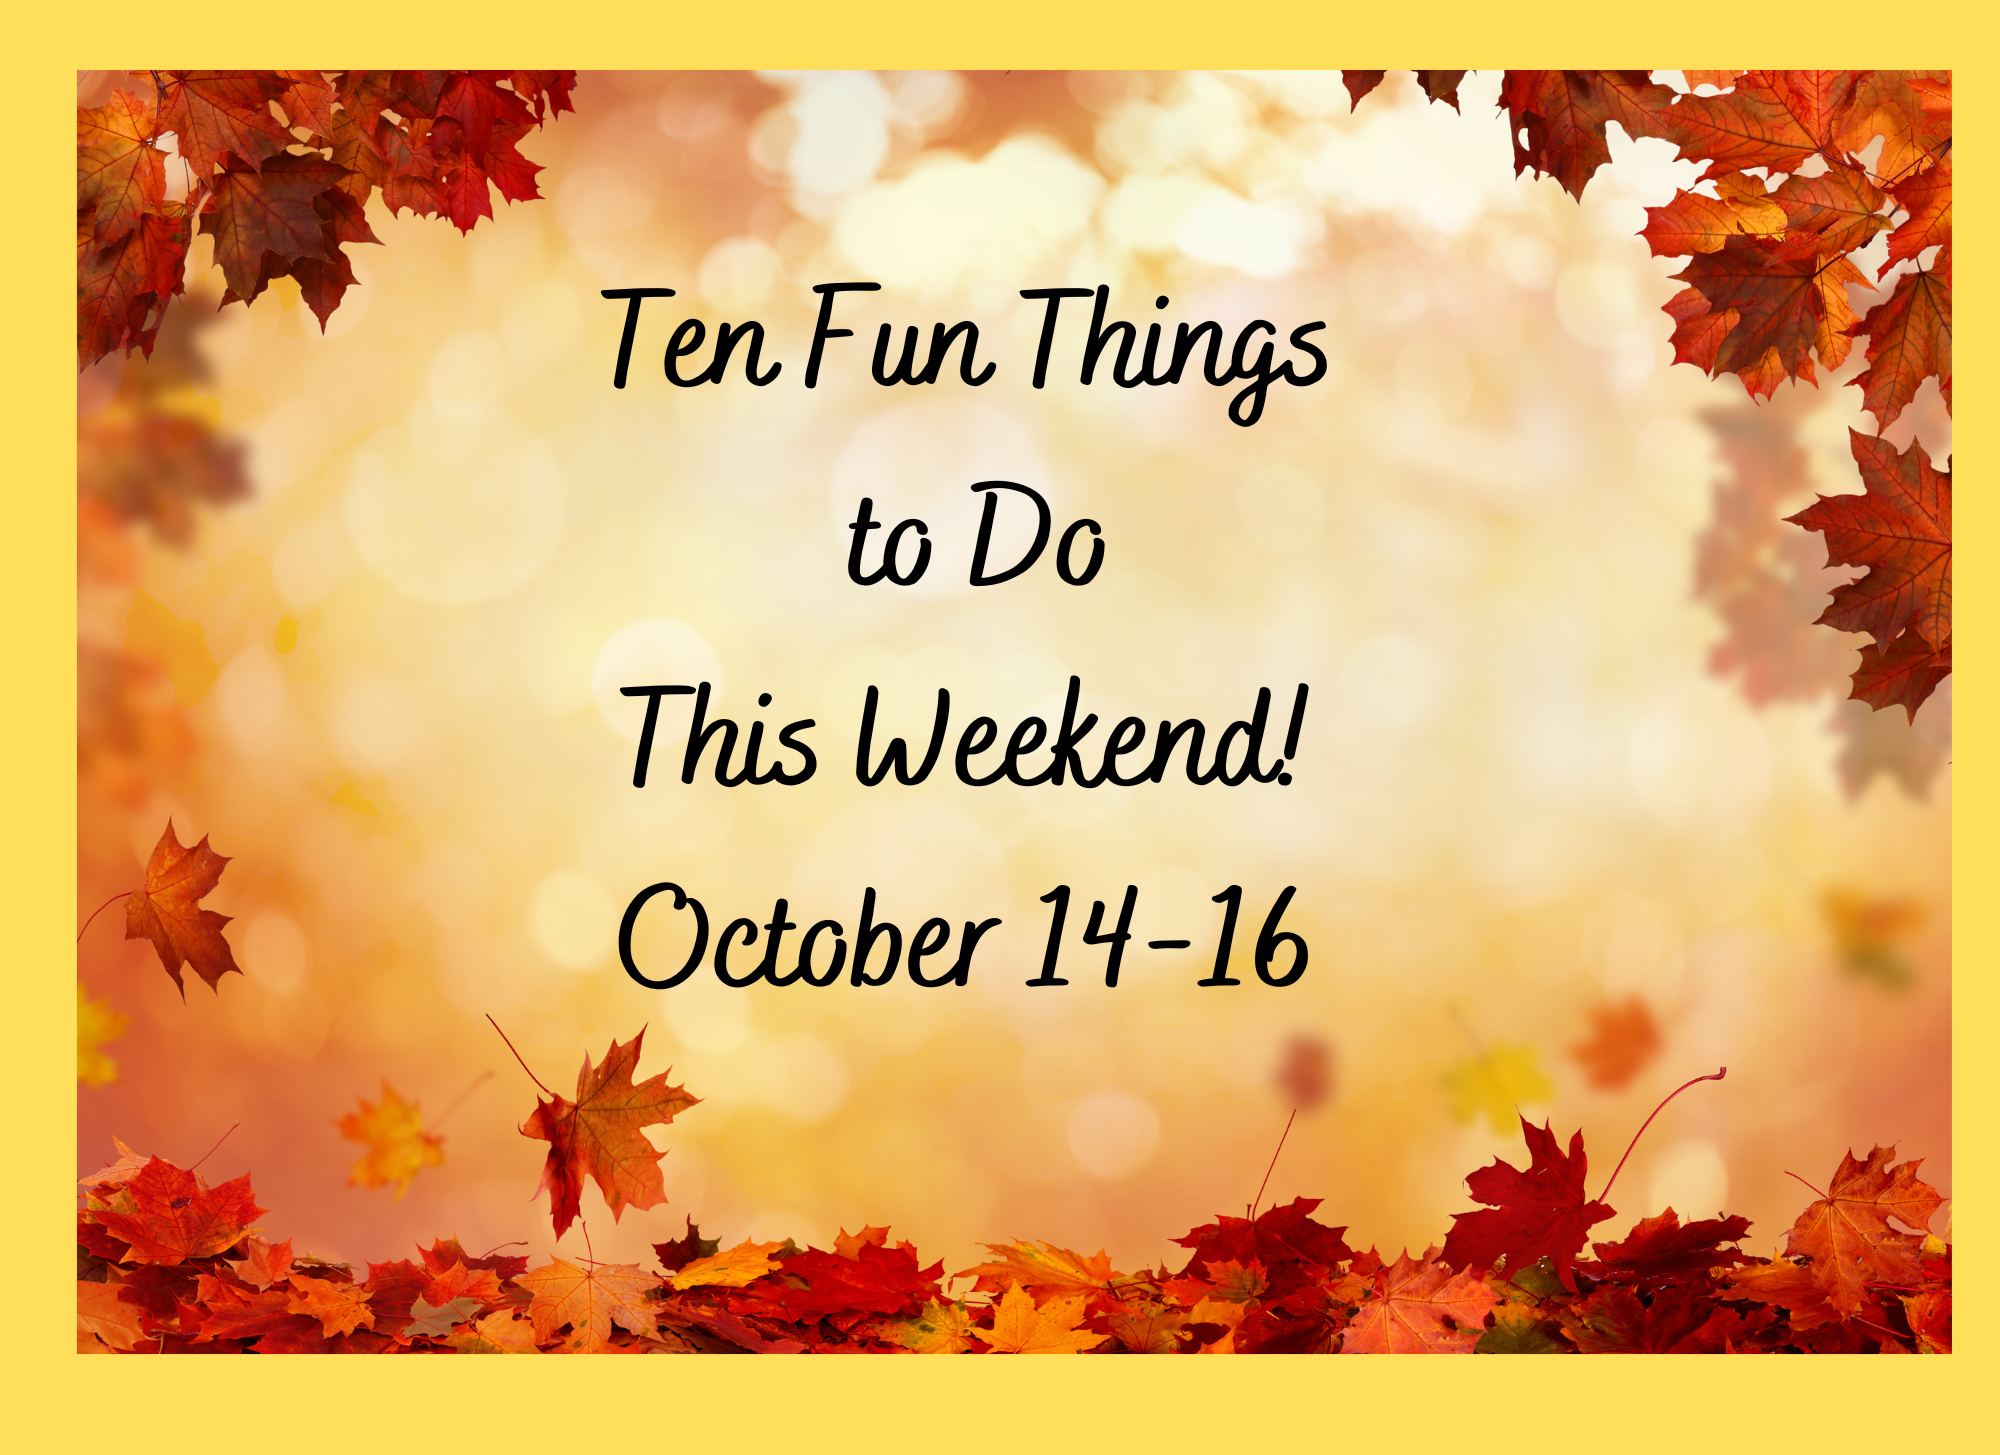 Ten Fun Things to Do October 14-16